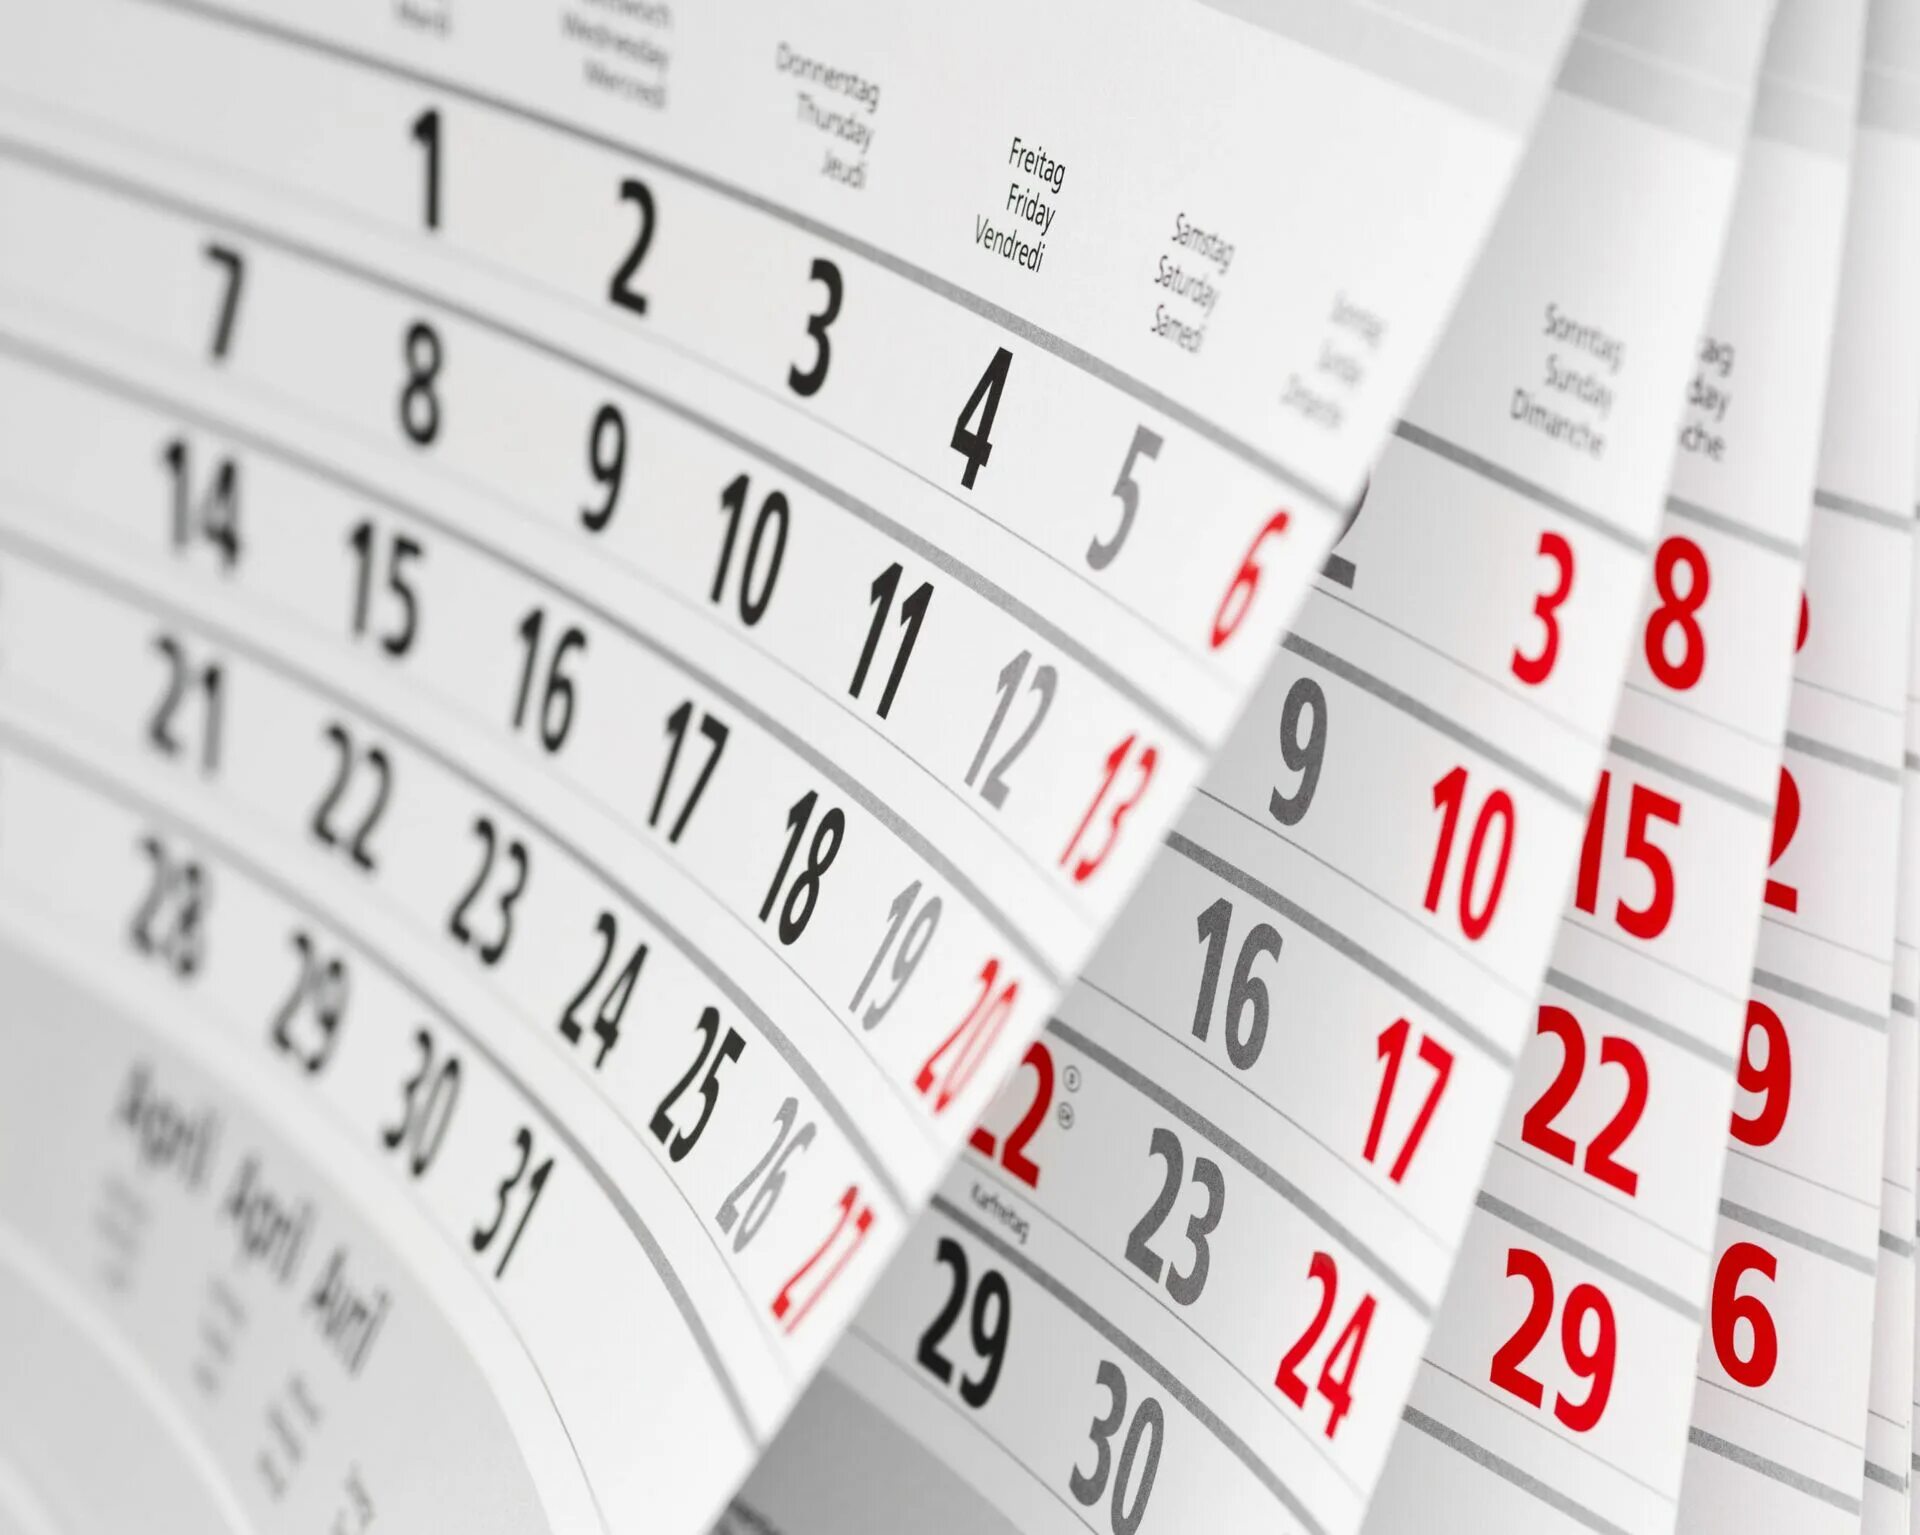 Календари. Календарь картинка. Фон для календаря. Изображения календарей картинки. 10 календарных лет в дни